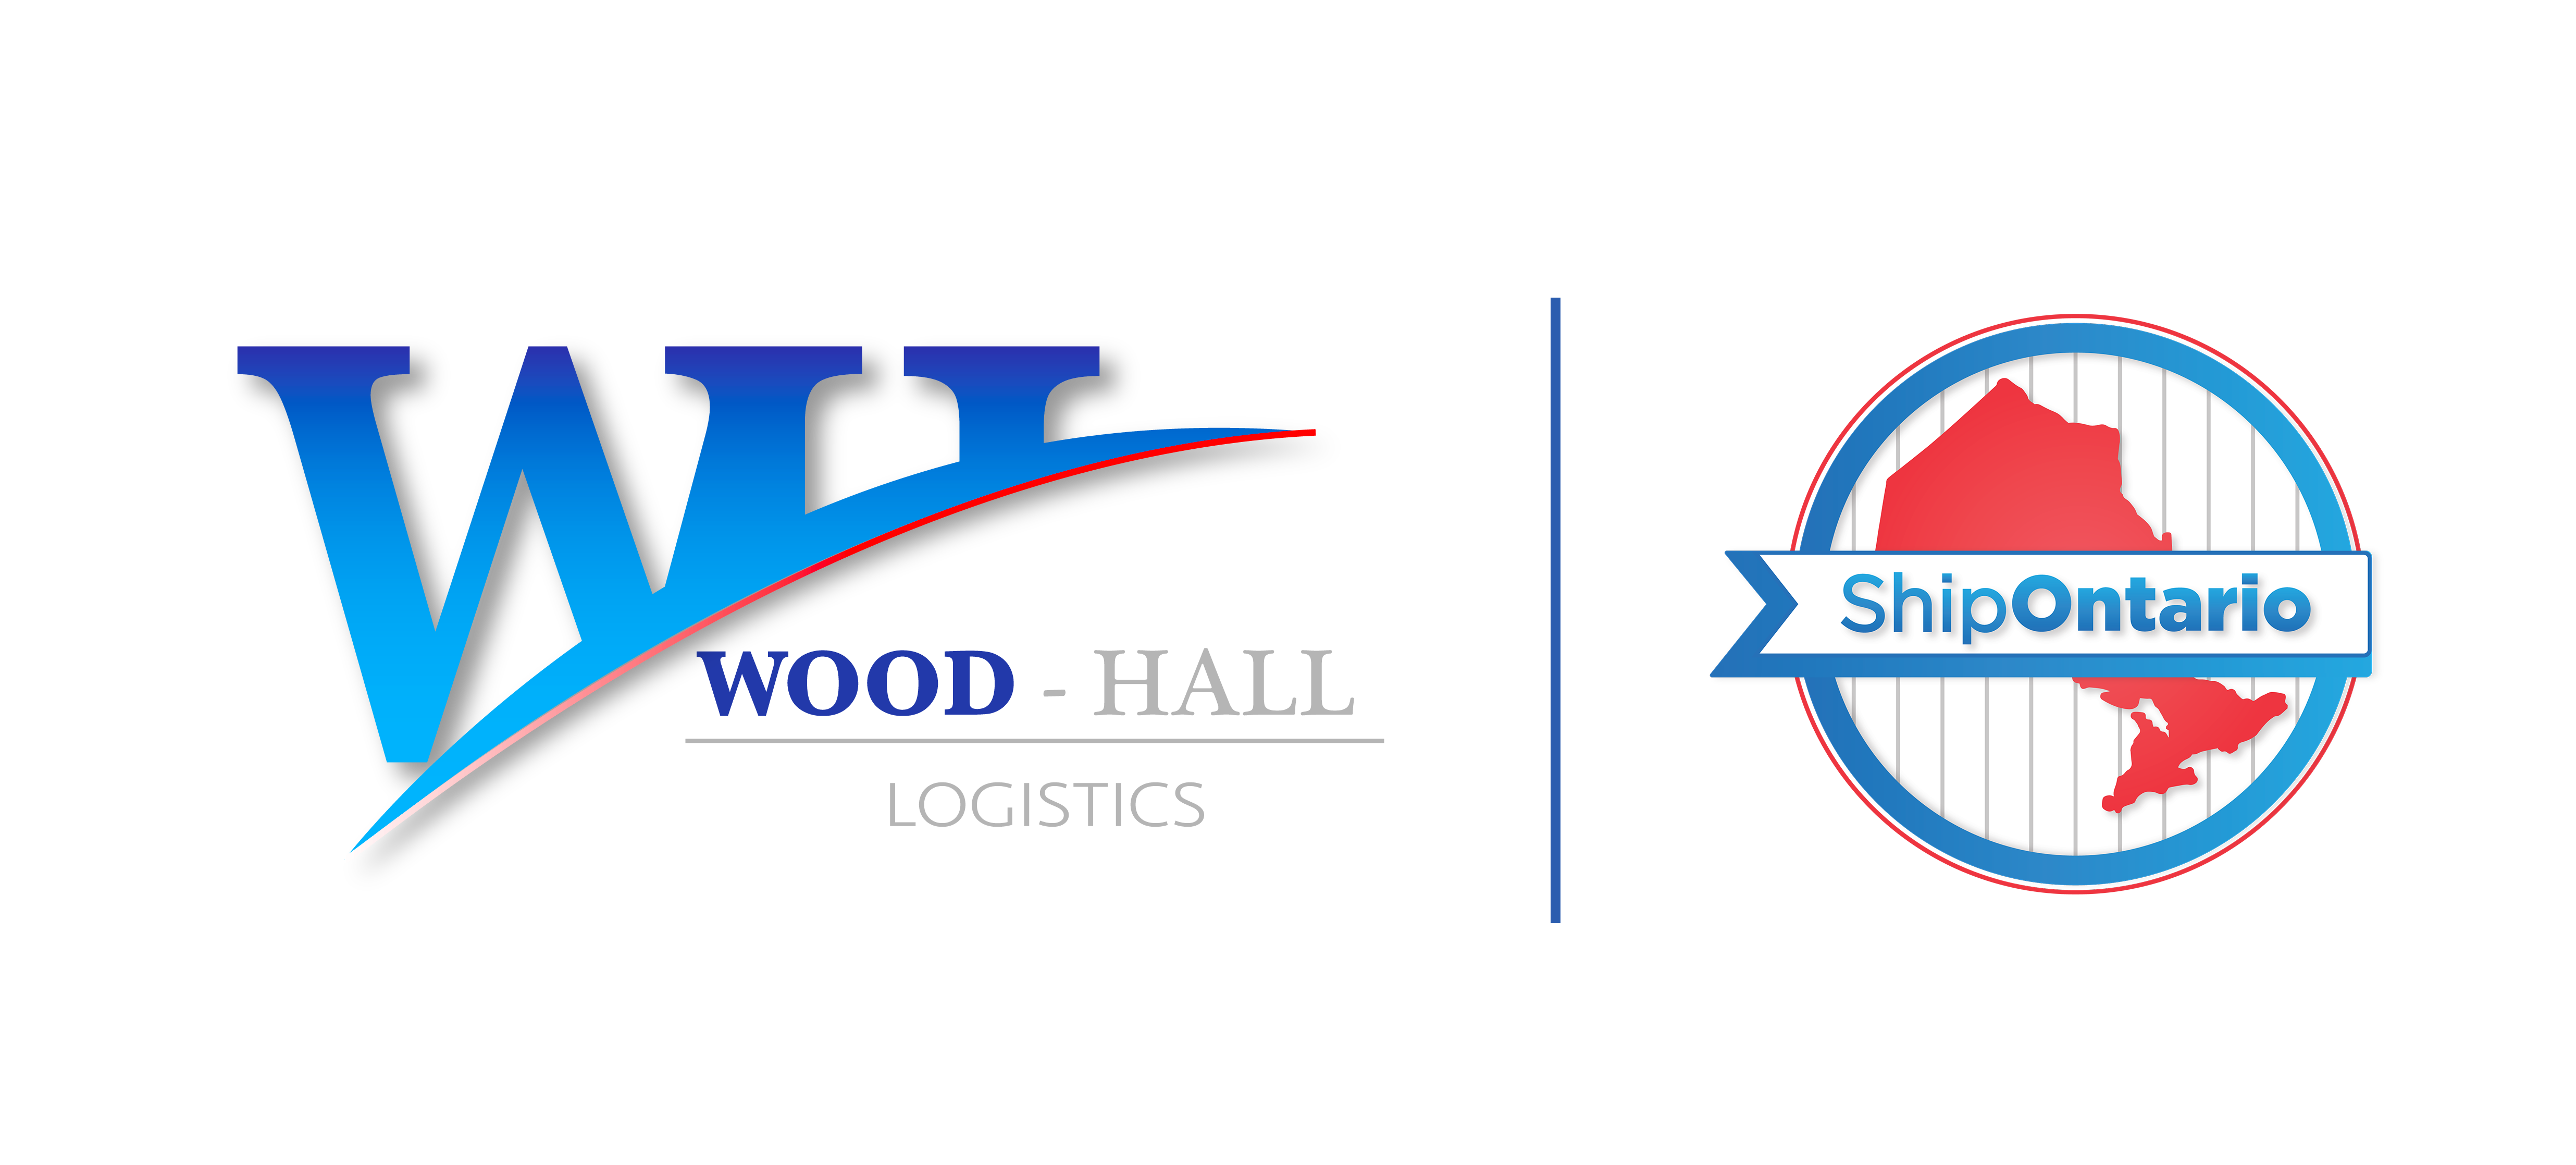 Wood-Hall Logistics